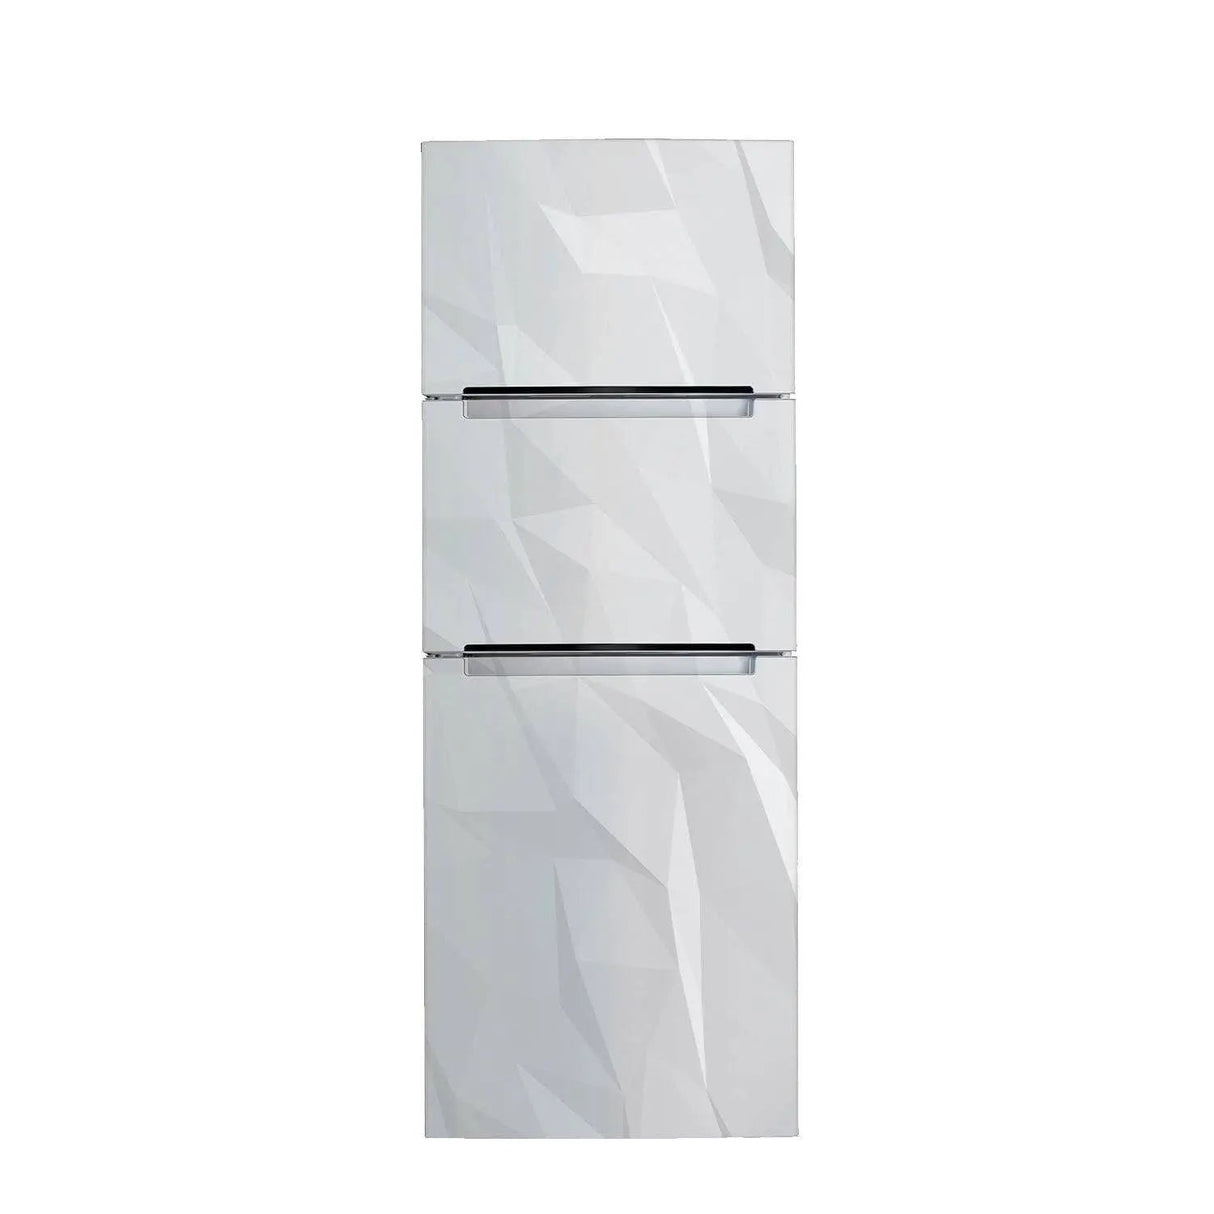 Fridge Door Wrap Vinyl Sticker - Skin Decor Front Refrigerator Decoration Wallpaper Decal - Covering Freezer Art Peel And Stick Mural - Decords